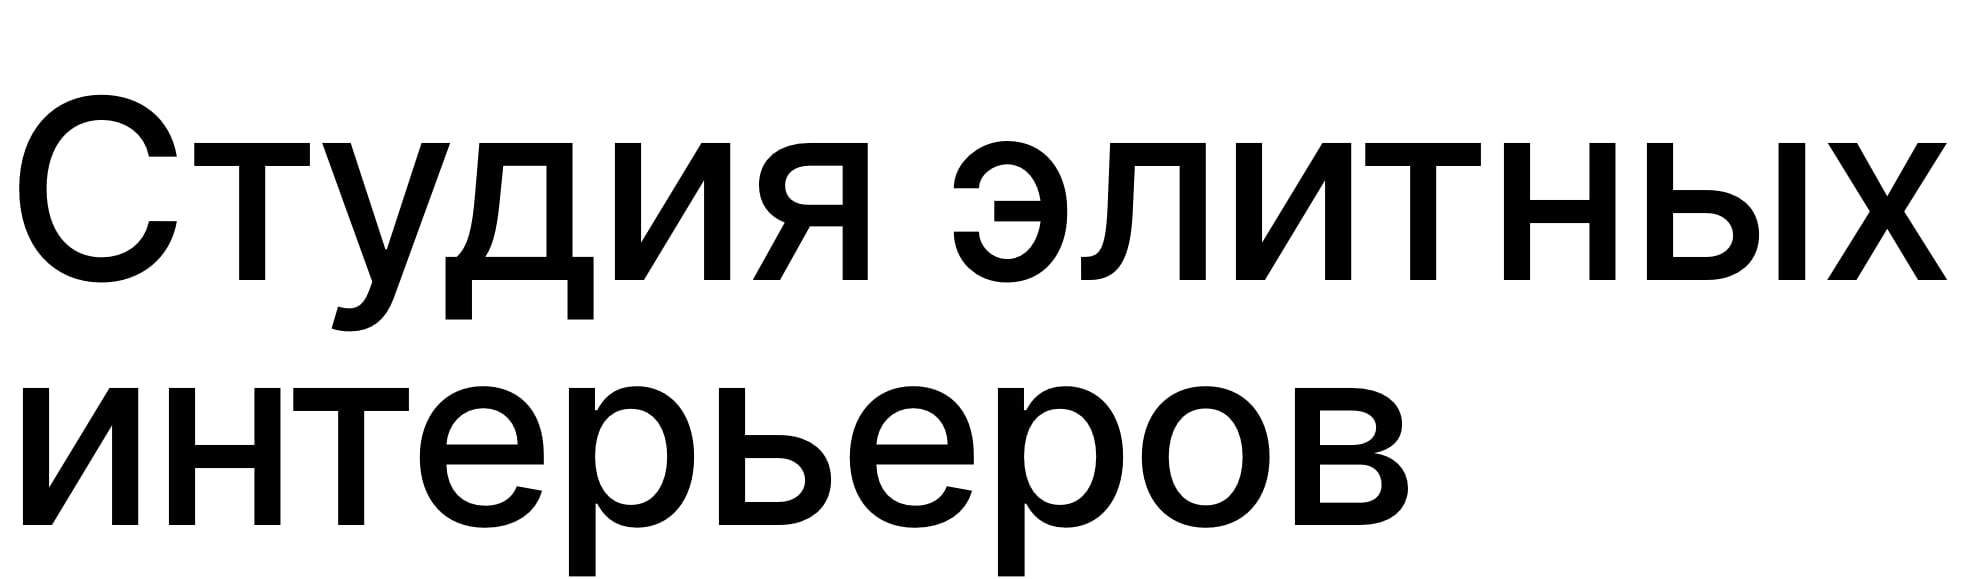 Логотип - Офис архитектурного бюро